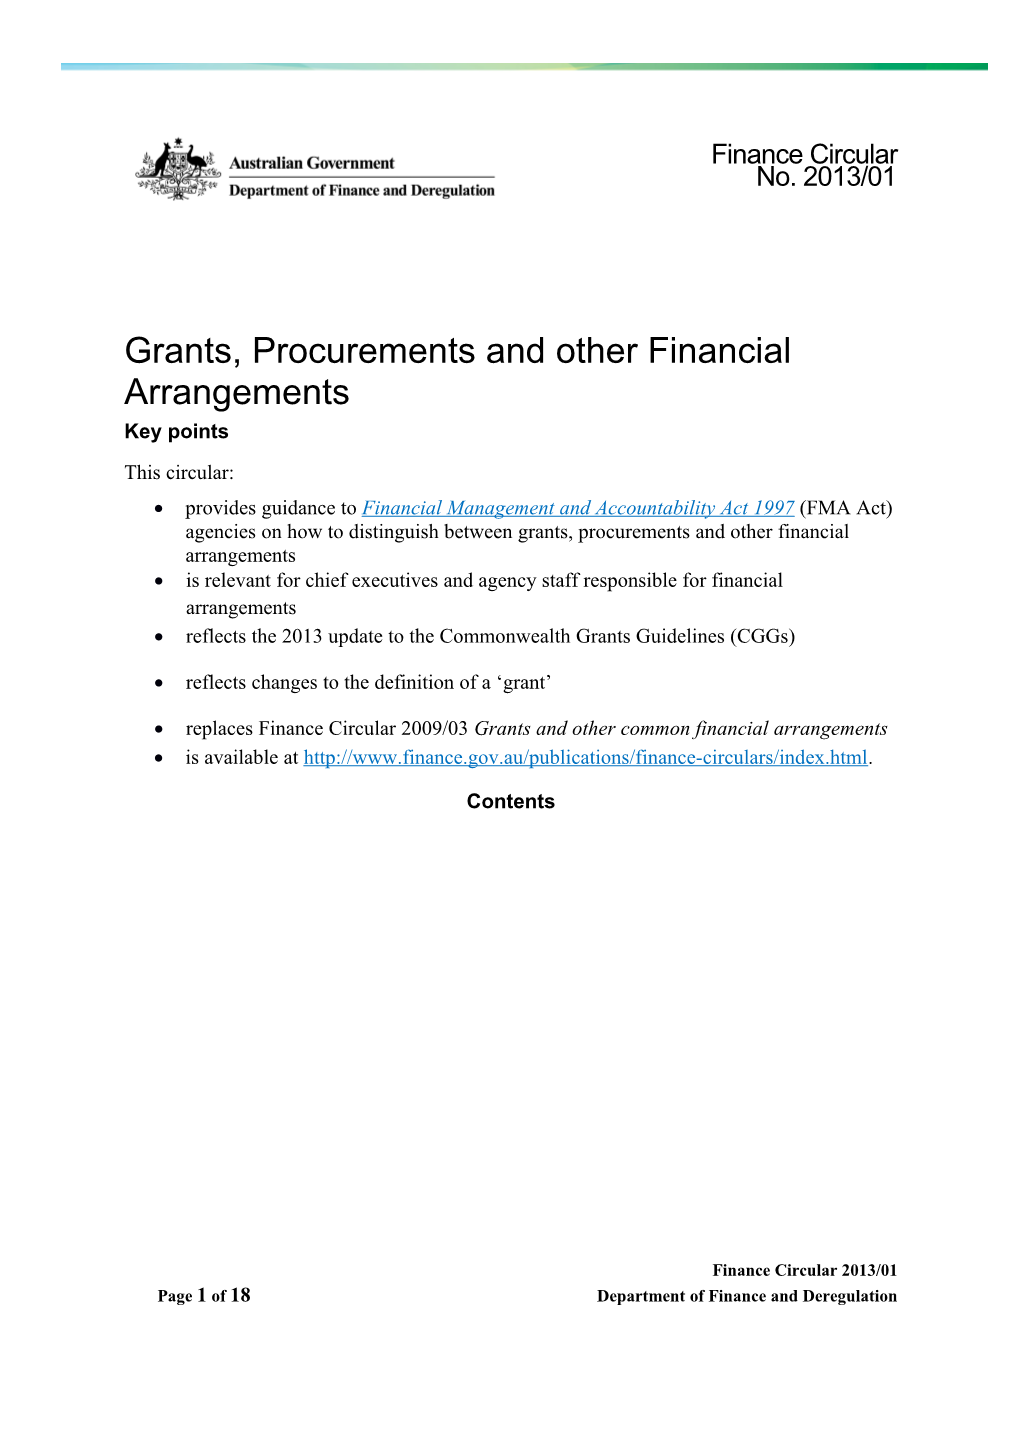 Finance Circular 2013/01 Grants, Procurements and Other Financial Arrangements